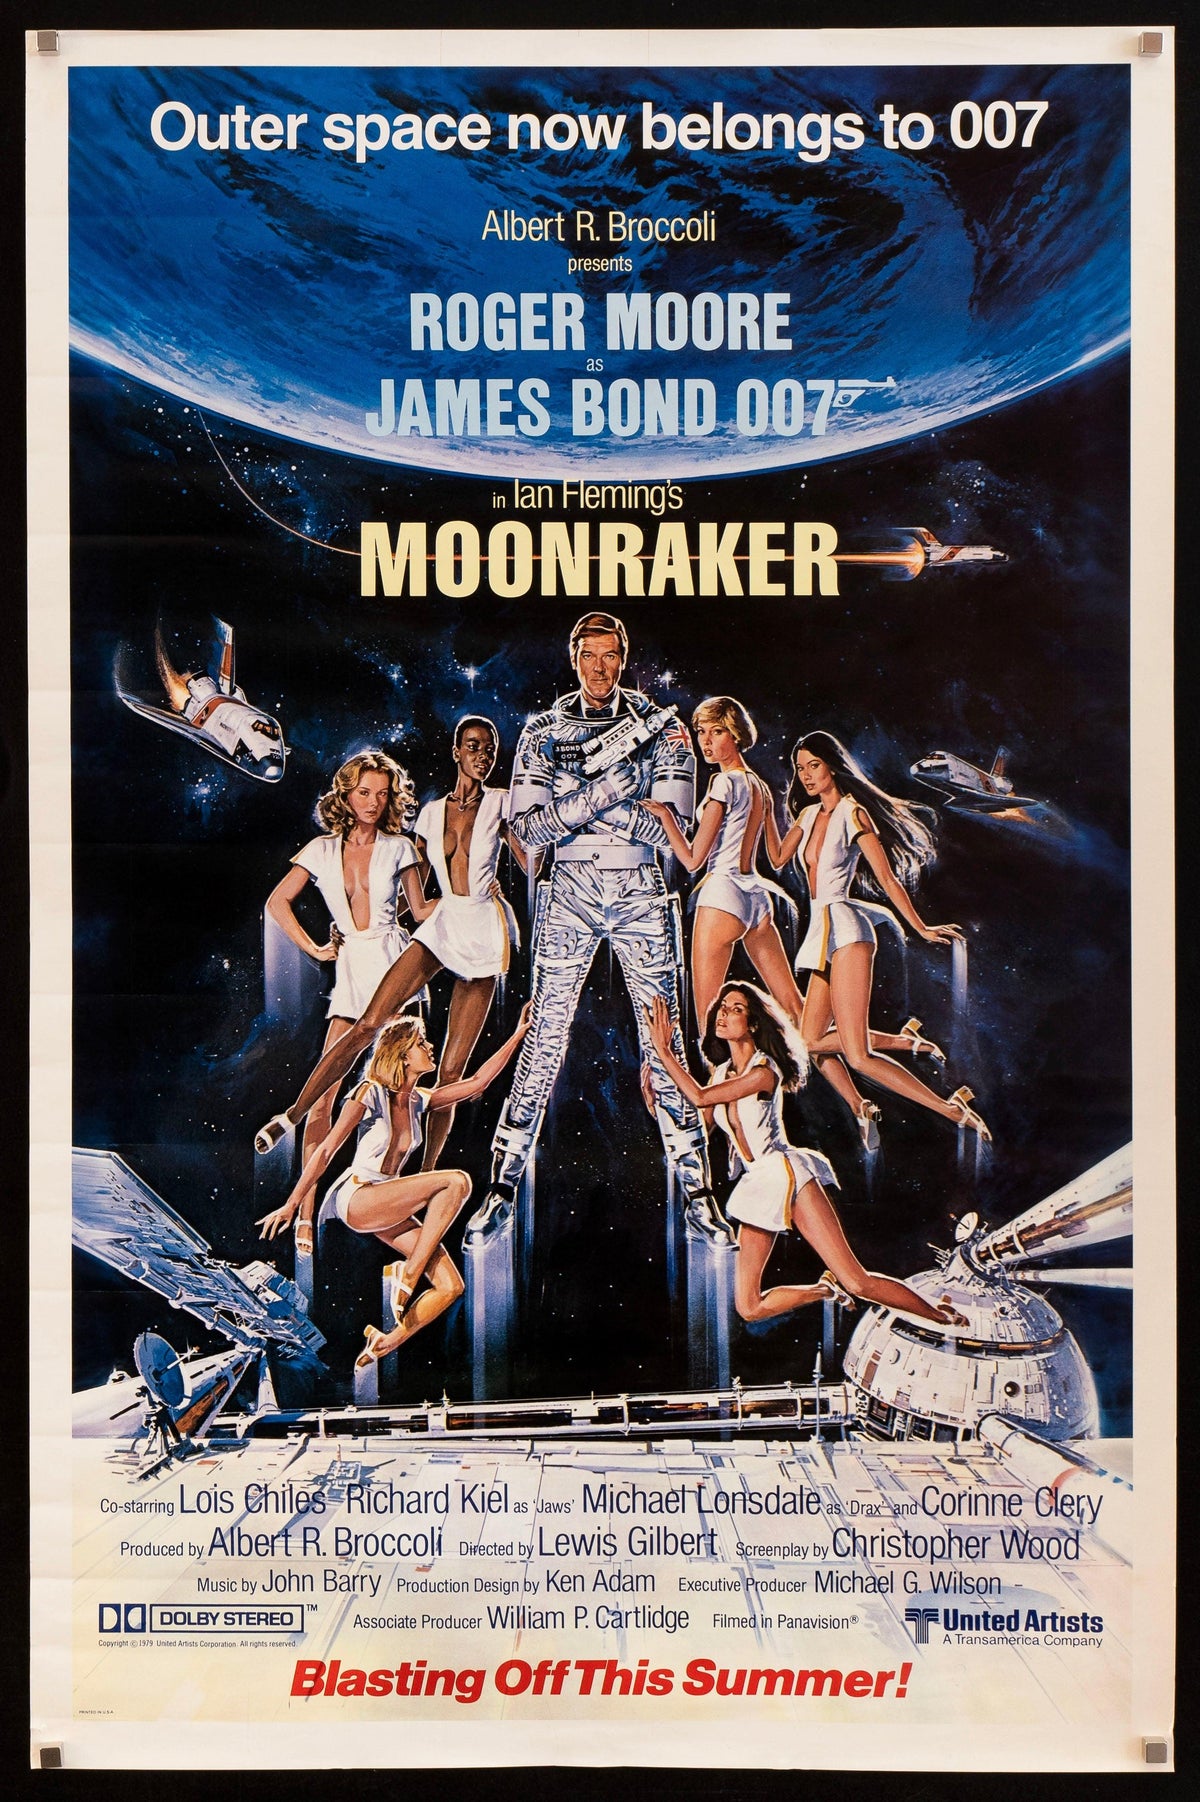 Moonraker 1979 Movie Poster USA 1 Sheet Size (27x41) 1 Sheet (27x41) Original Vintage Movie Poster